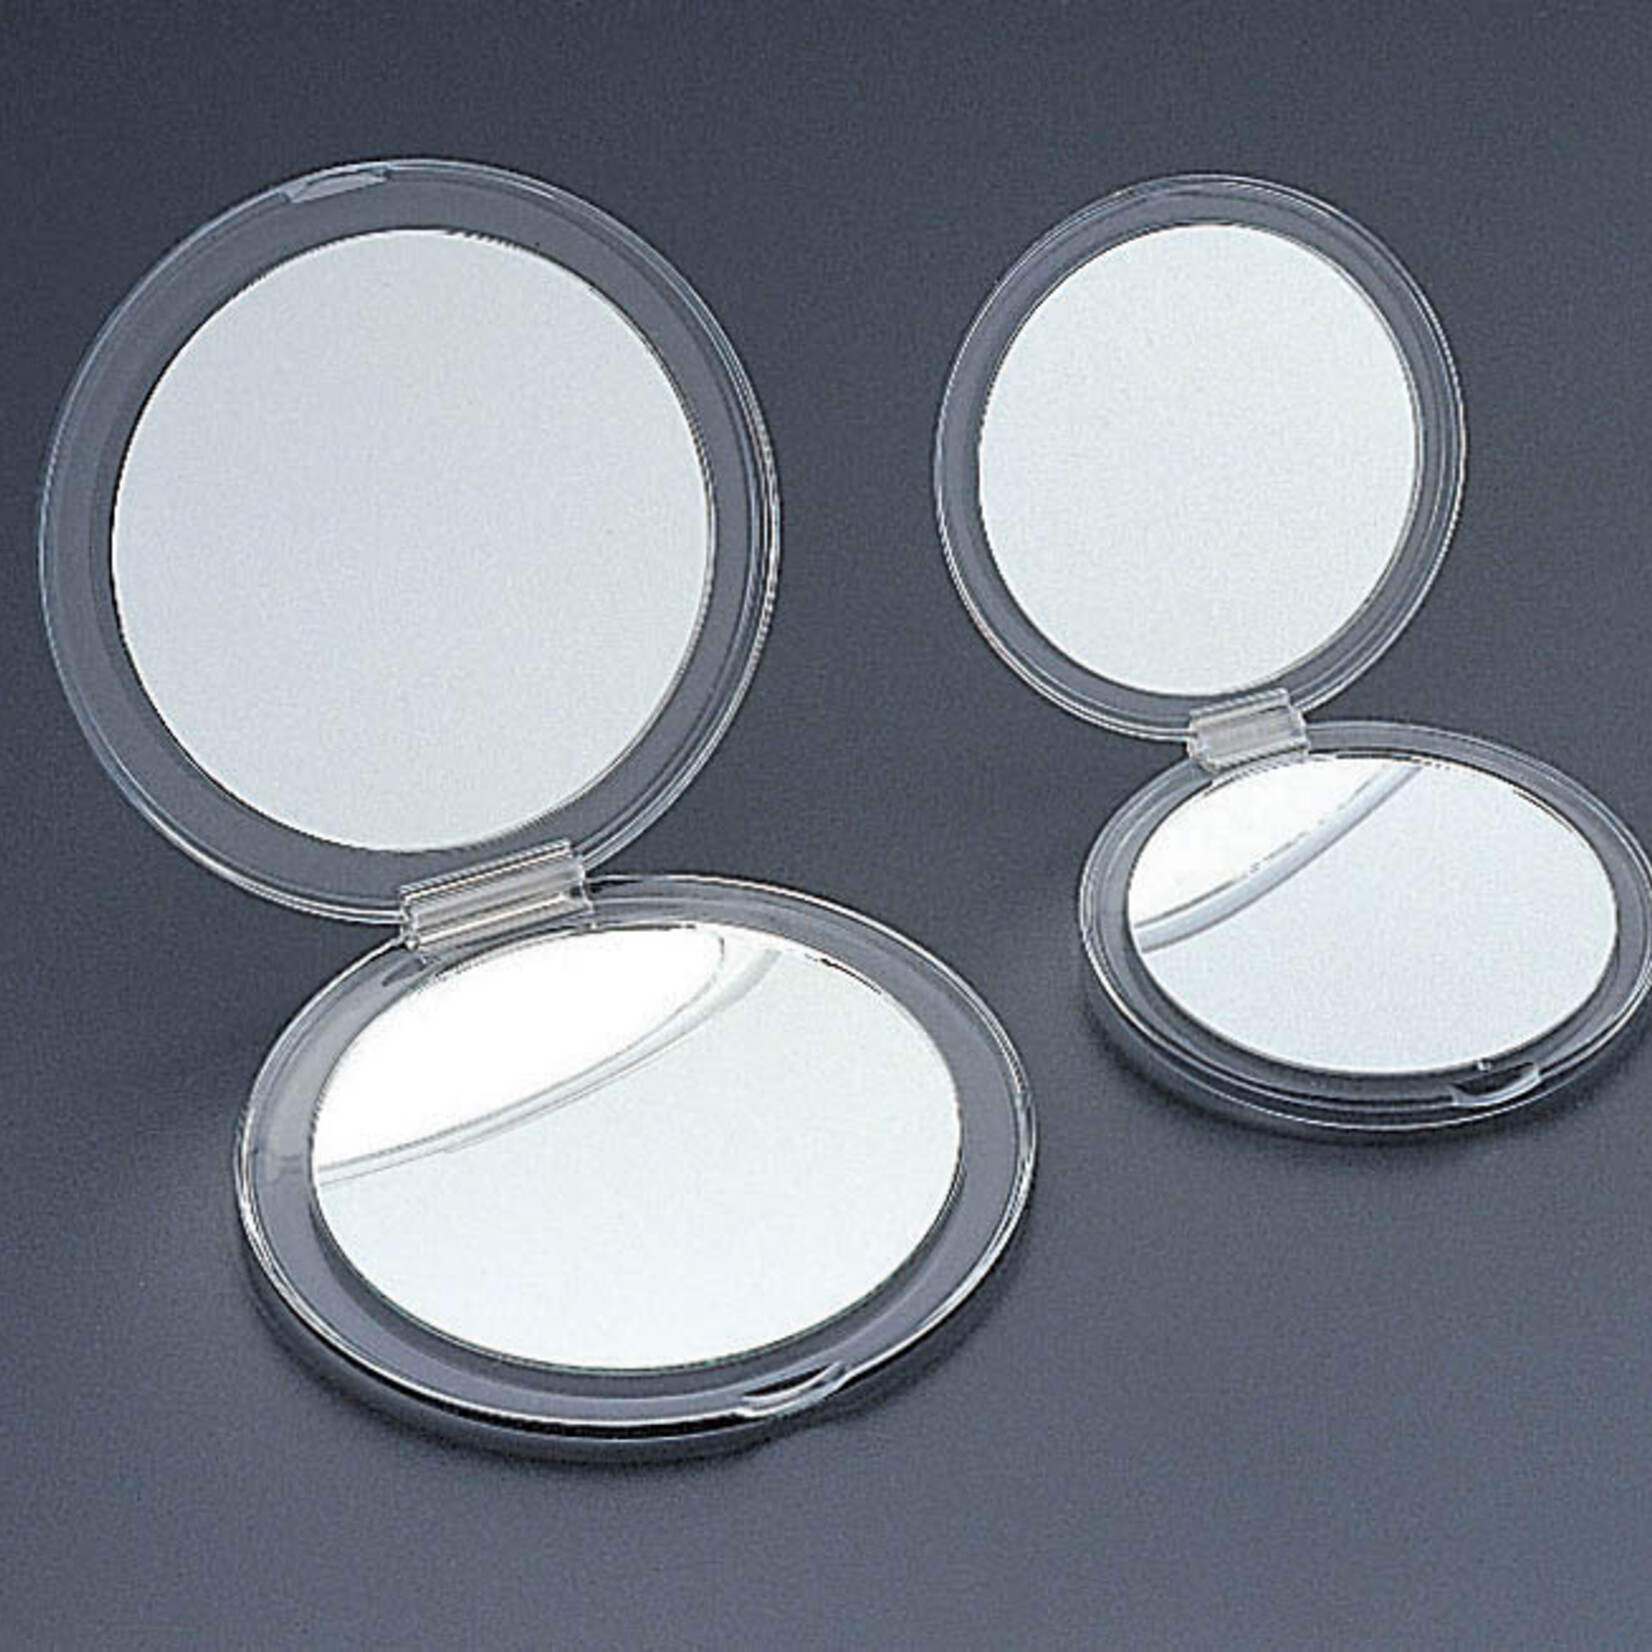 4" Compact Round Mirror - Blank